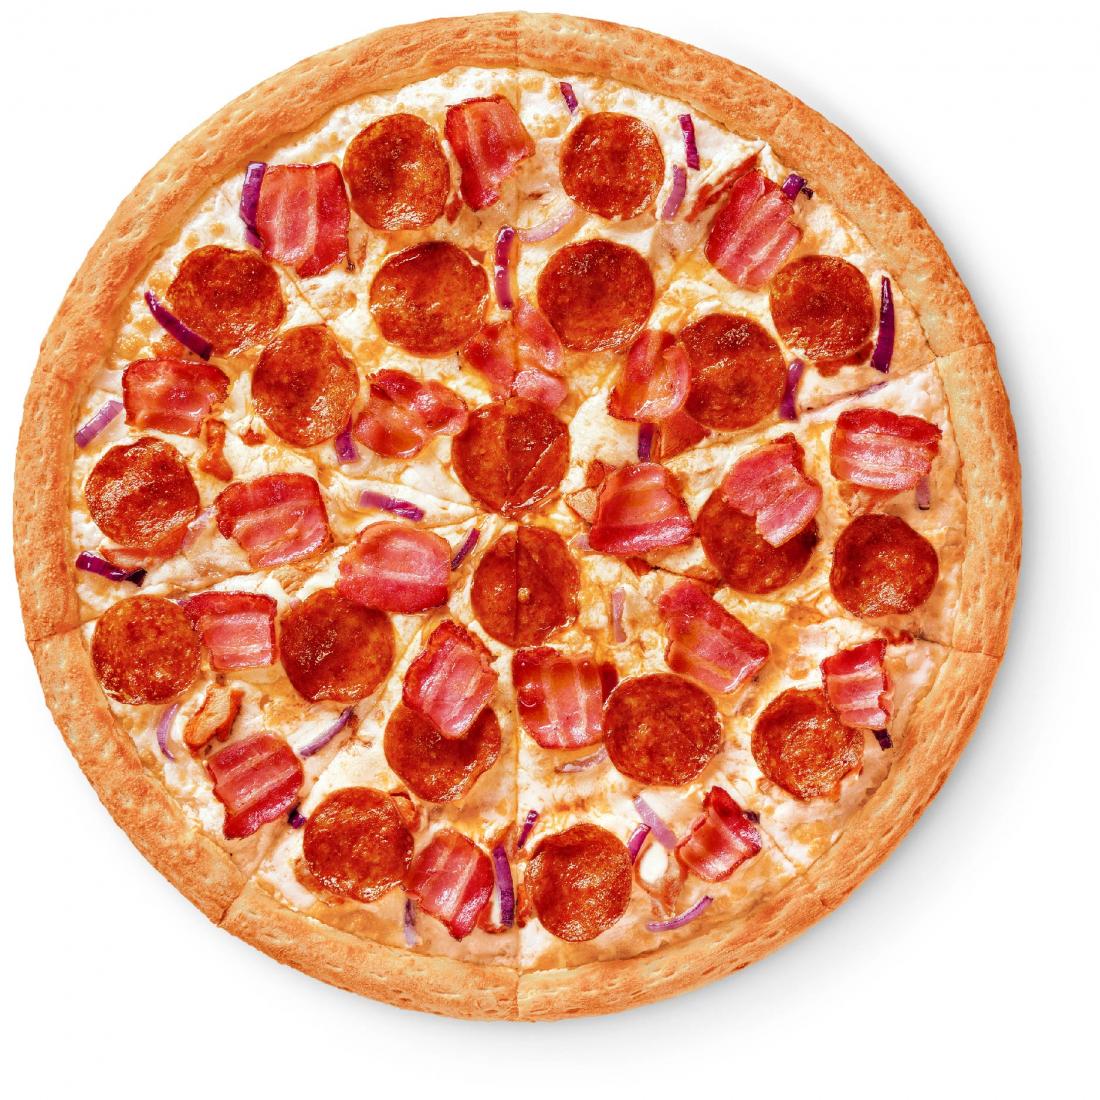 состав пиццы пепперони в додо пицца фото 31